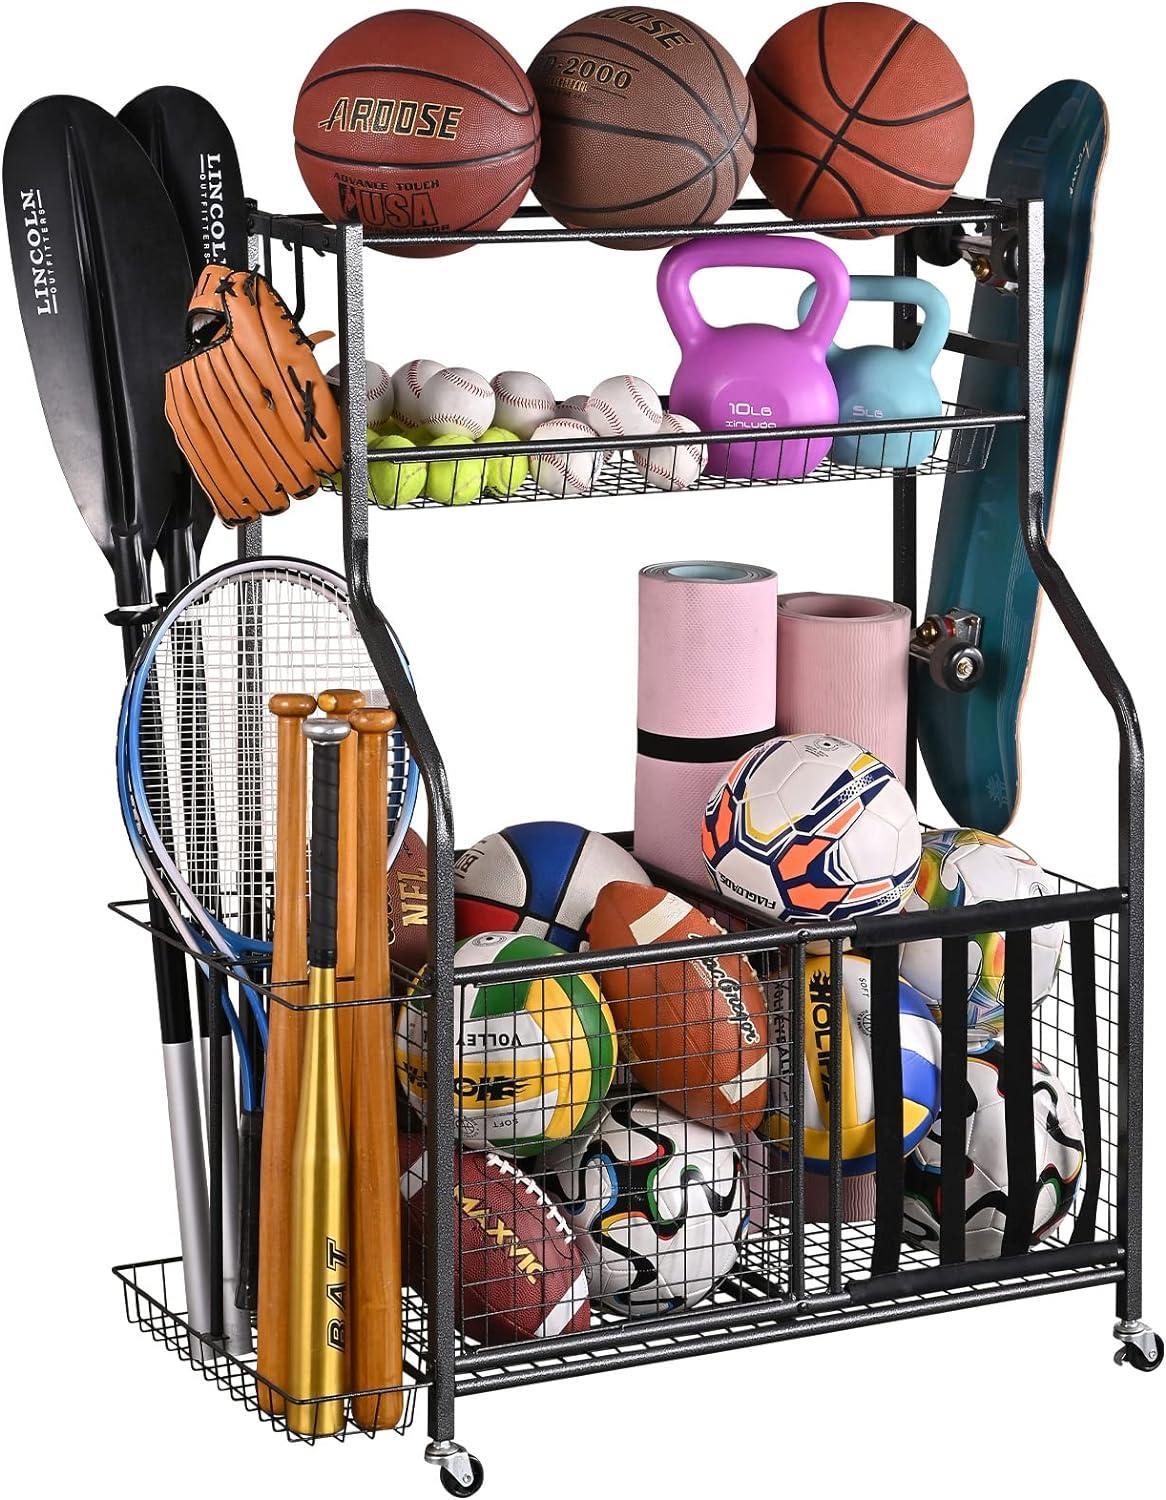 Garage Storage System with Baskets, Hooks, and Sports Gear Organizer